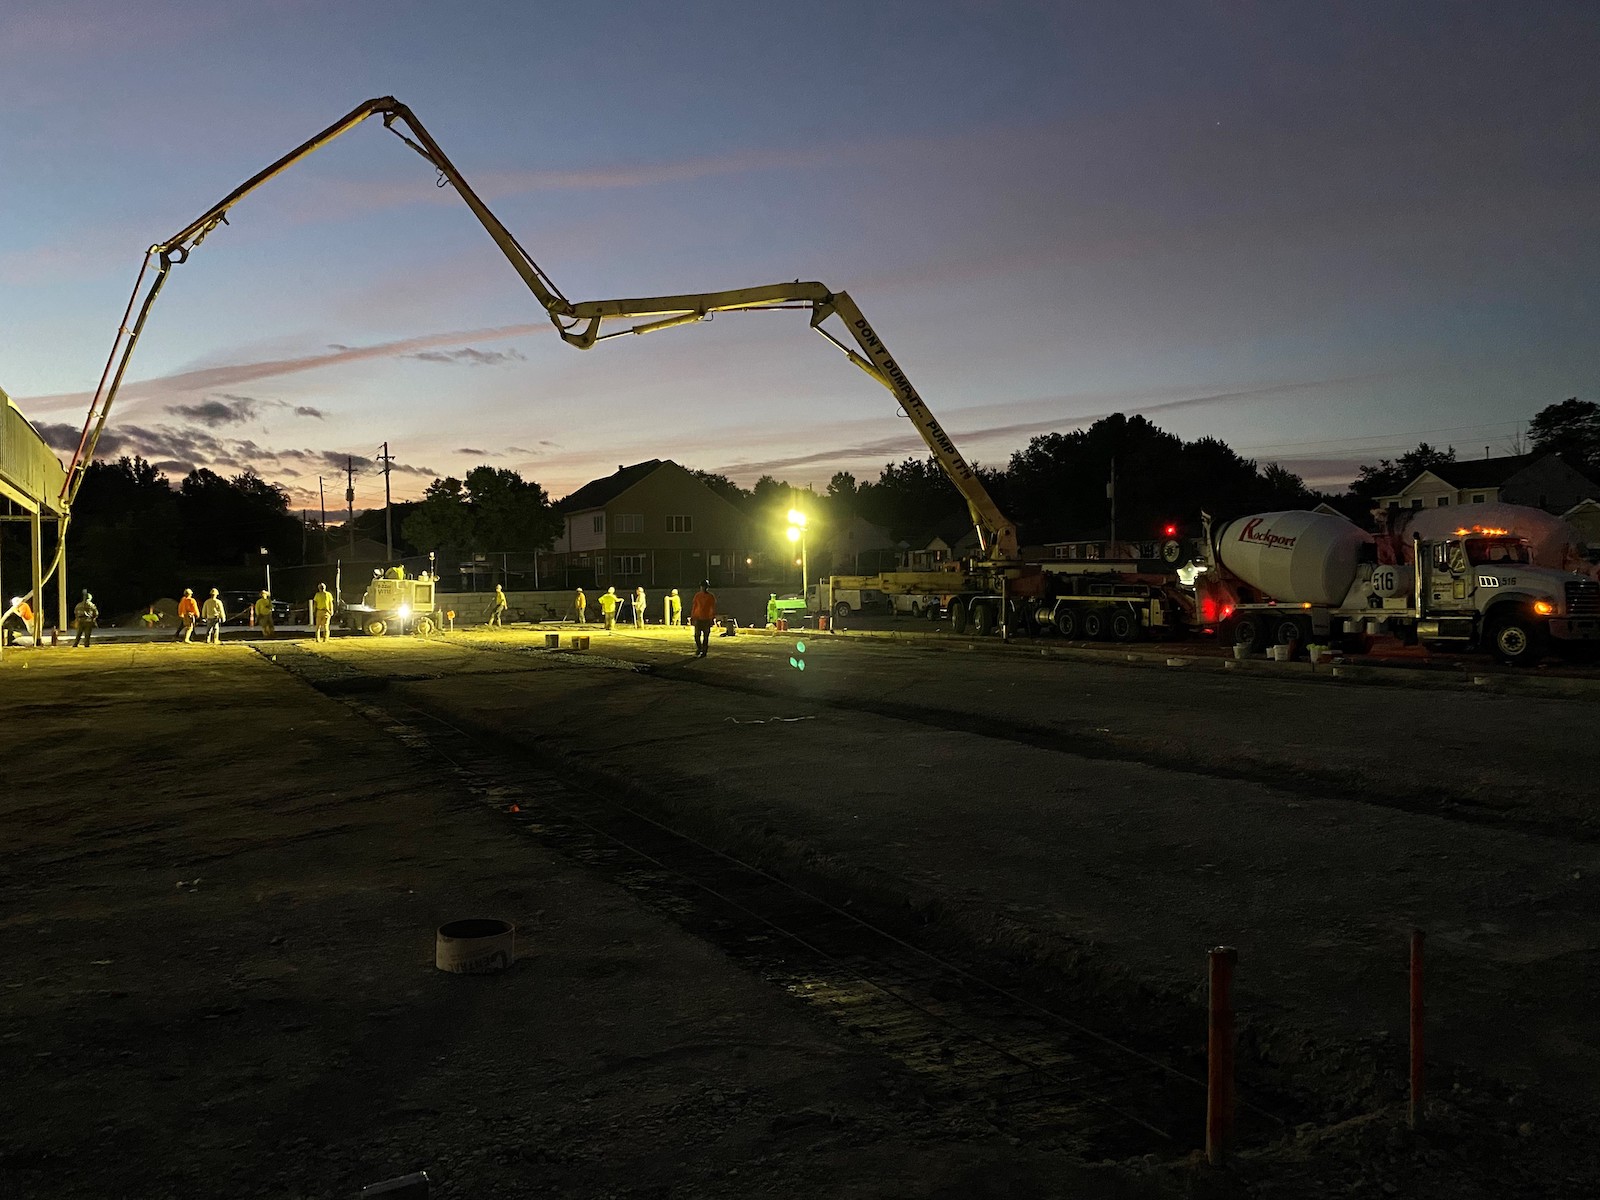 Construction workers continue to pour concrete as the sun sets.